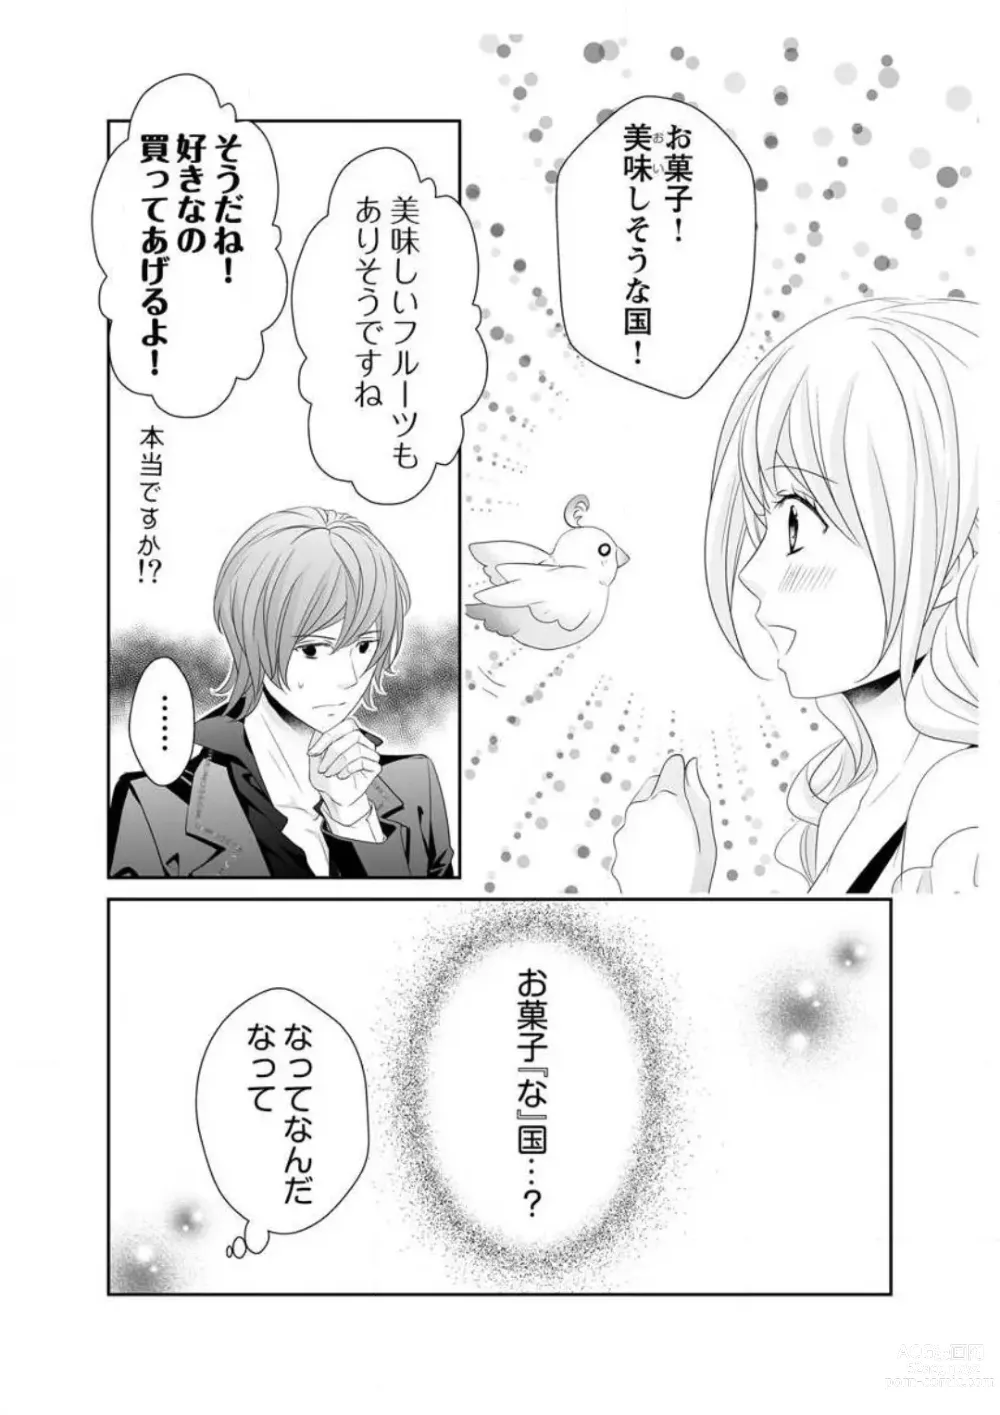 Page 241 of manga Ero ◆ Meruhen Aoi Tori 1-10